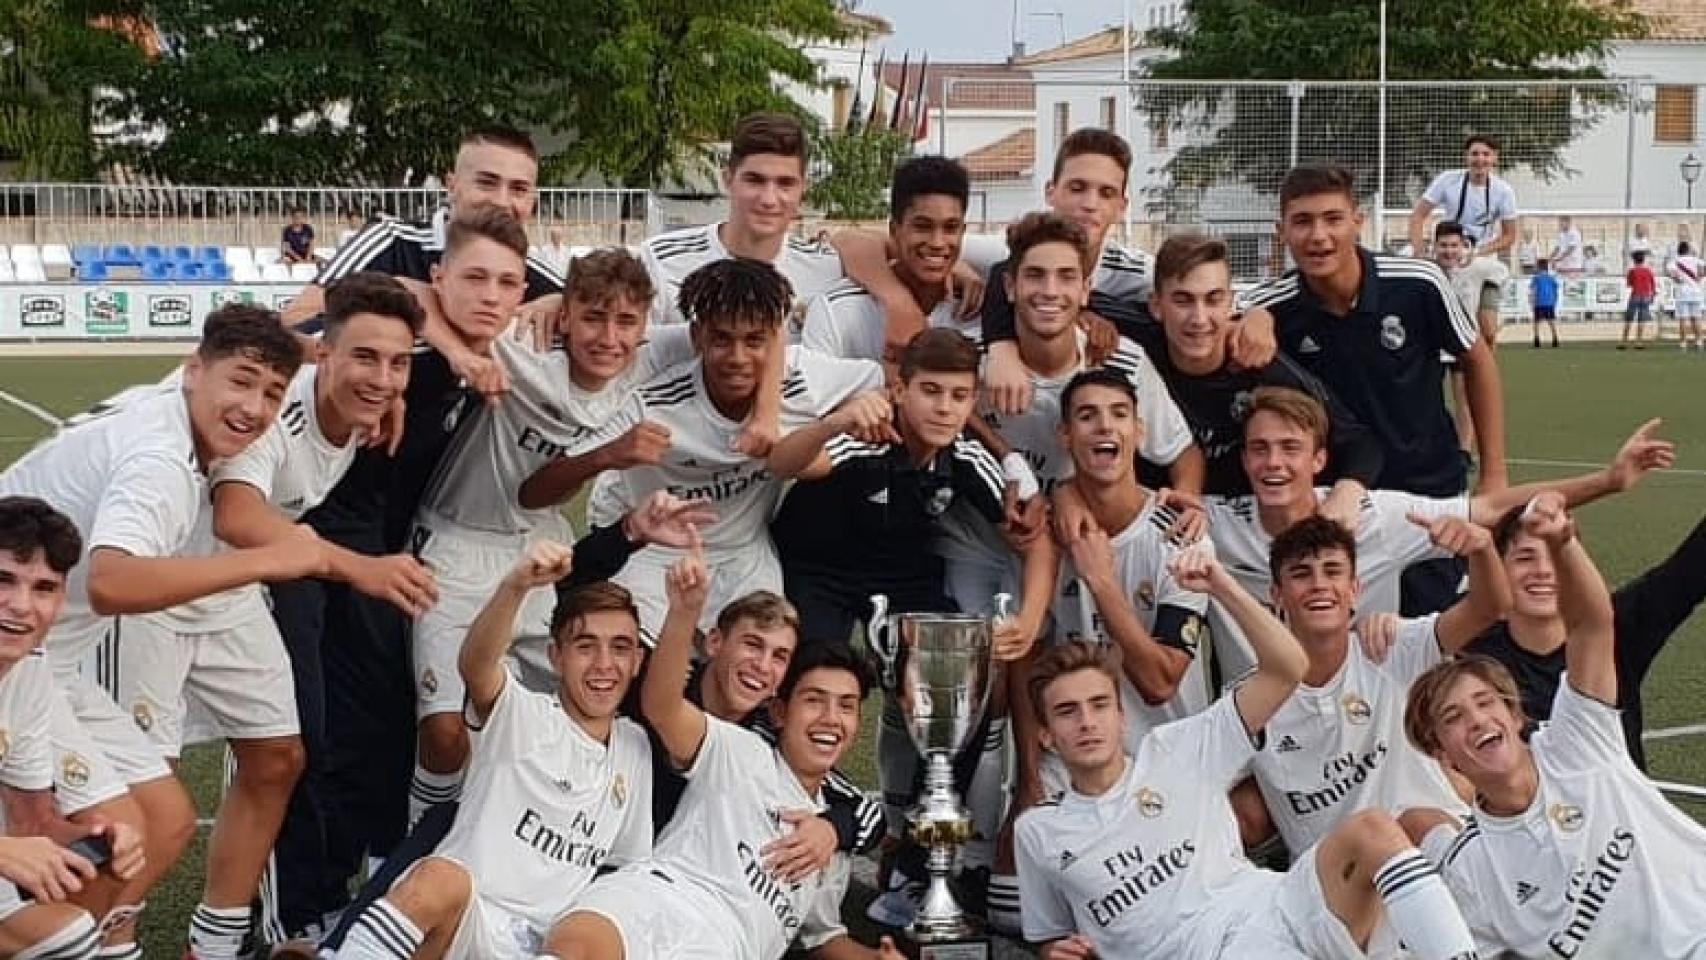 El Juvenil C gana el Trofeo de Brunete contra el Atlético de Madrid